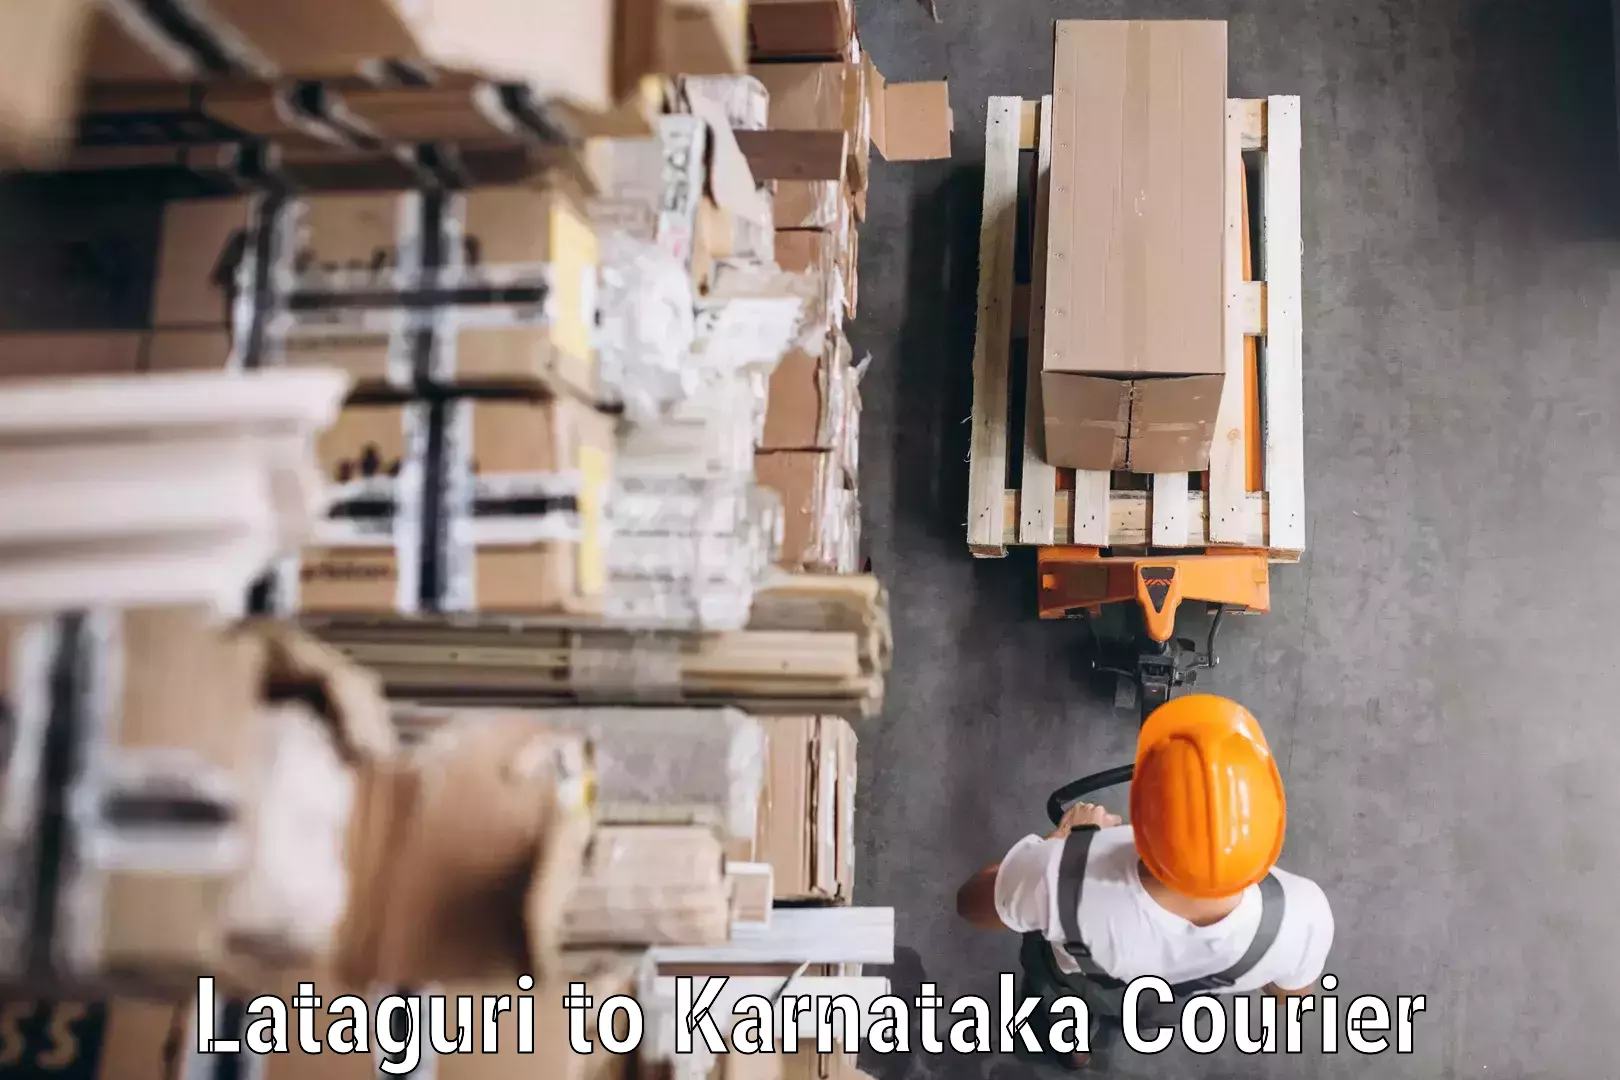 Digital courier platforms Lataguri to Karnataka